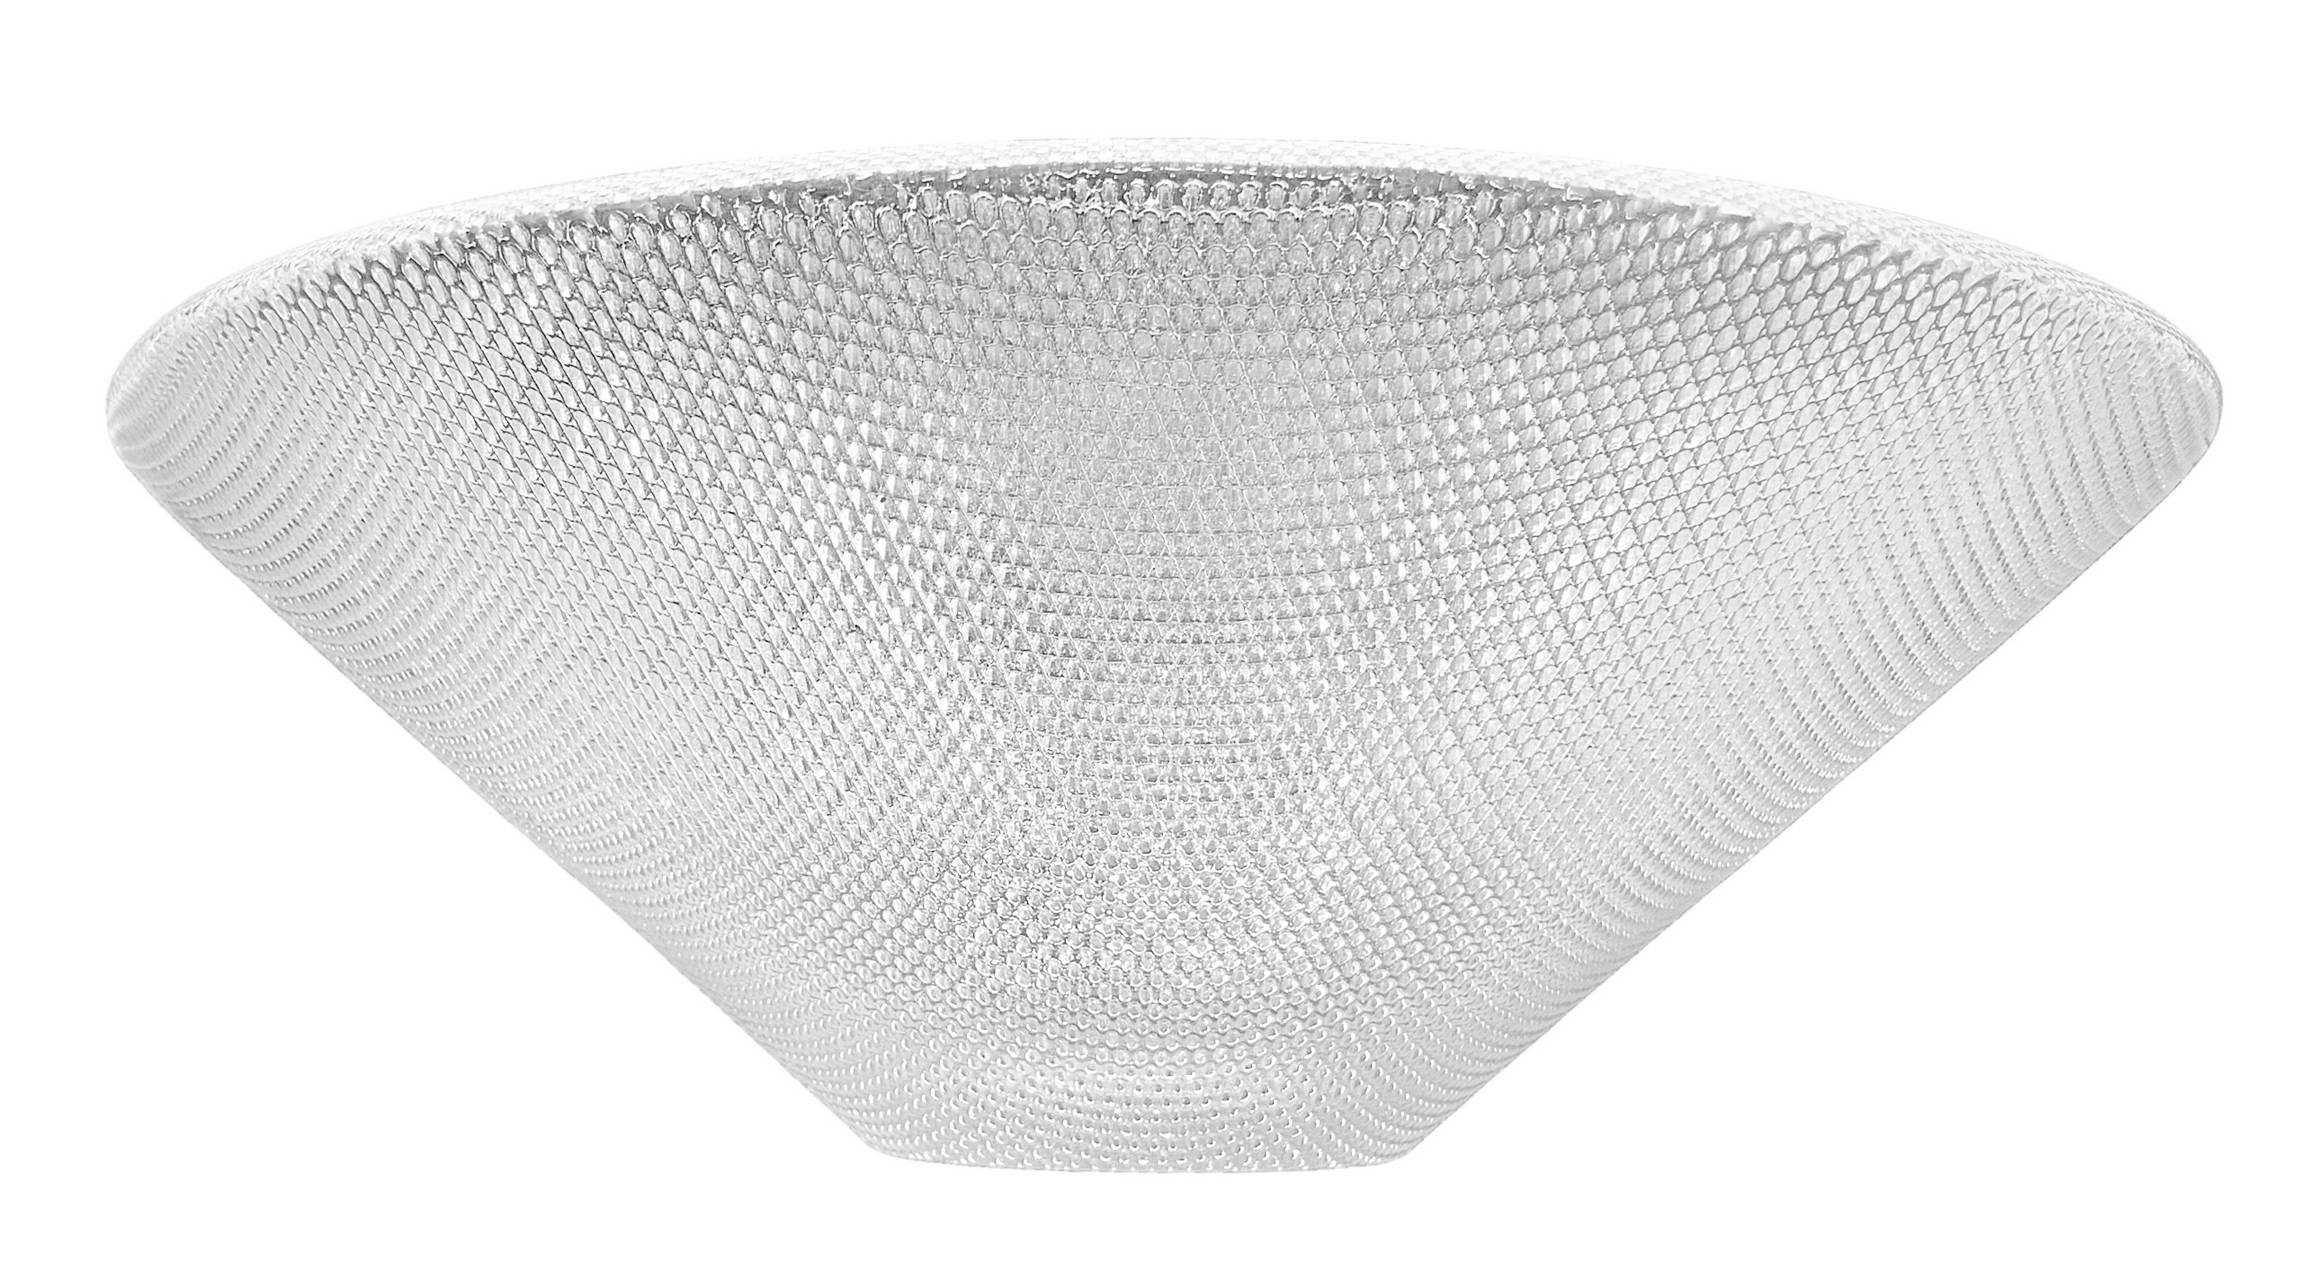 Centerpiece of frustoconical shape in diamond printed transparent glass. H 9 cm diameter 26.5 cm